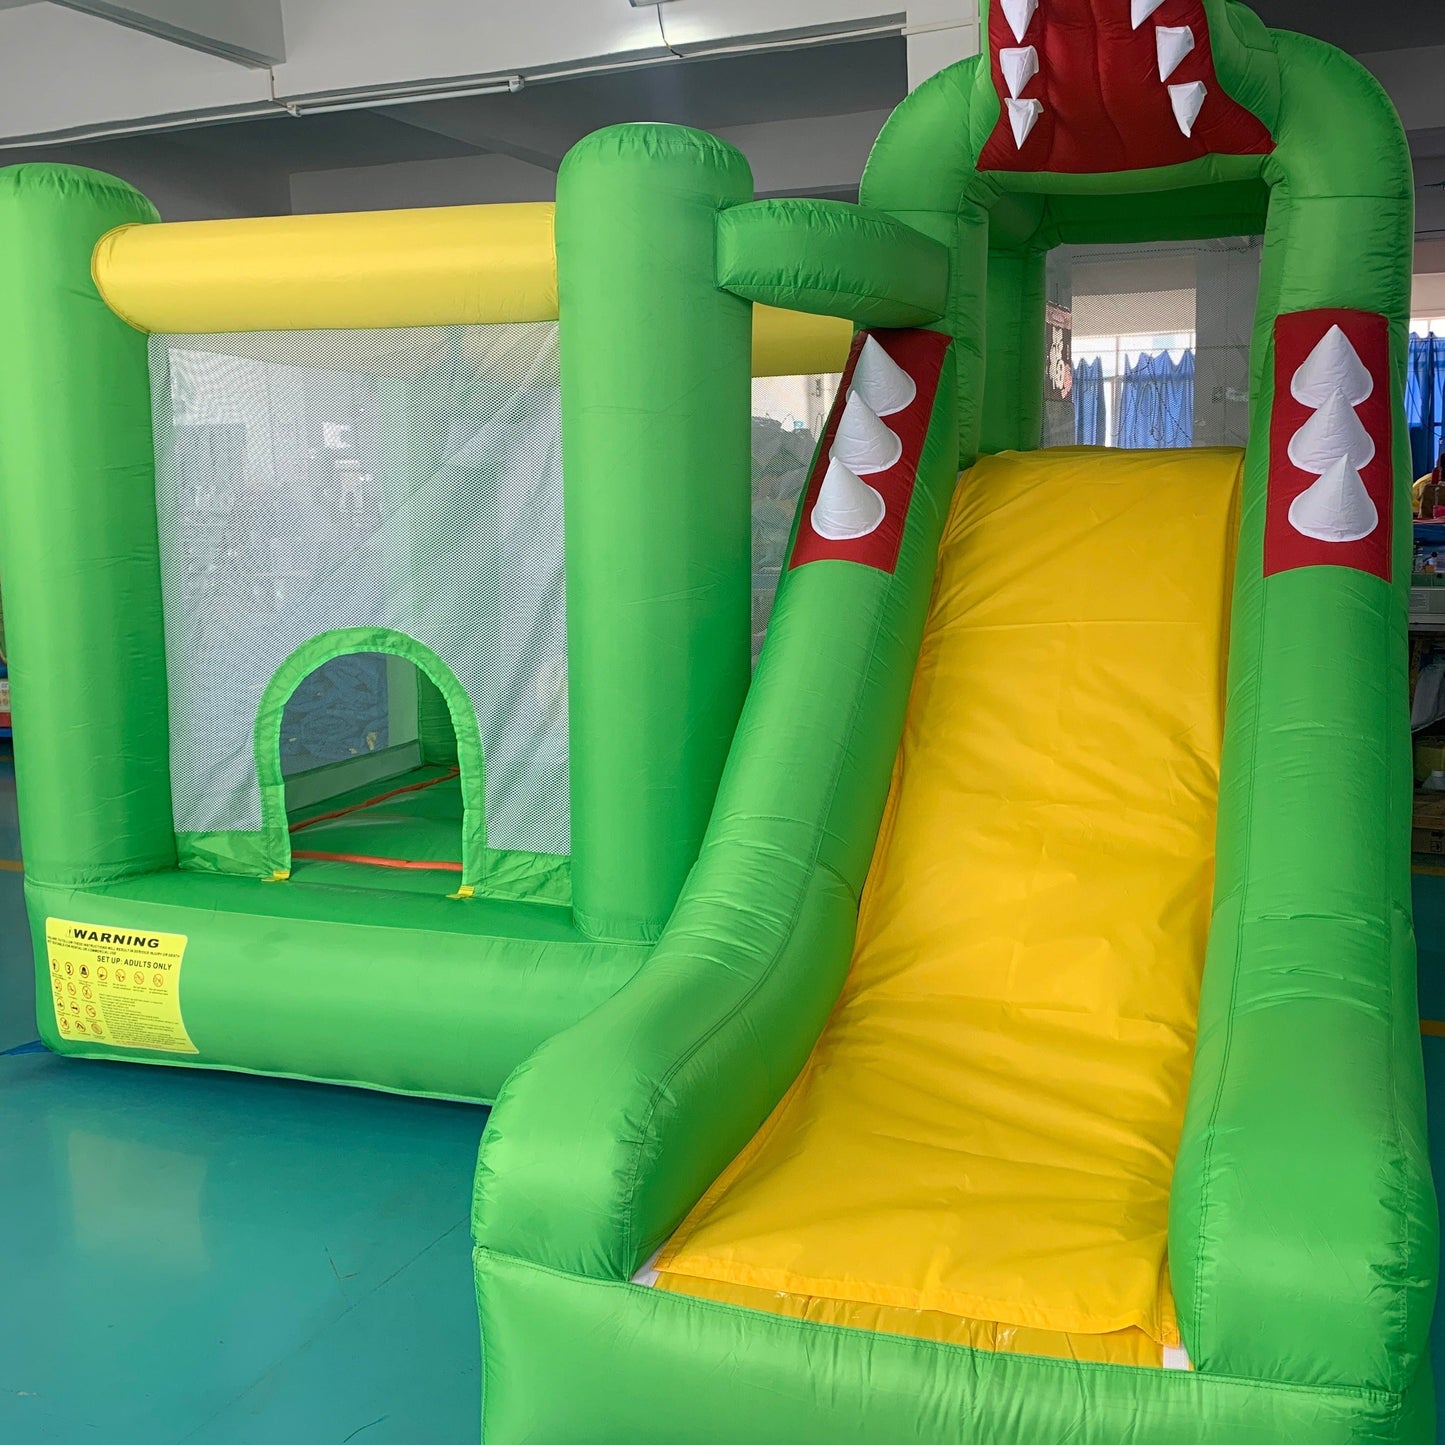 YARD Green Dinosaur Bounce House Inflatable Slide